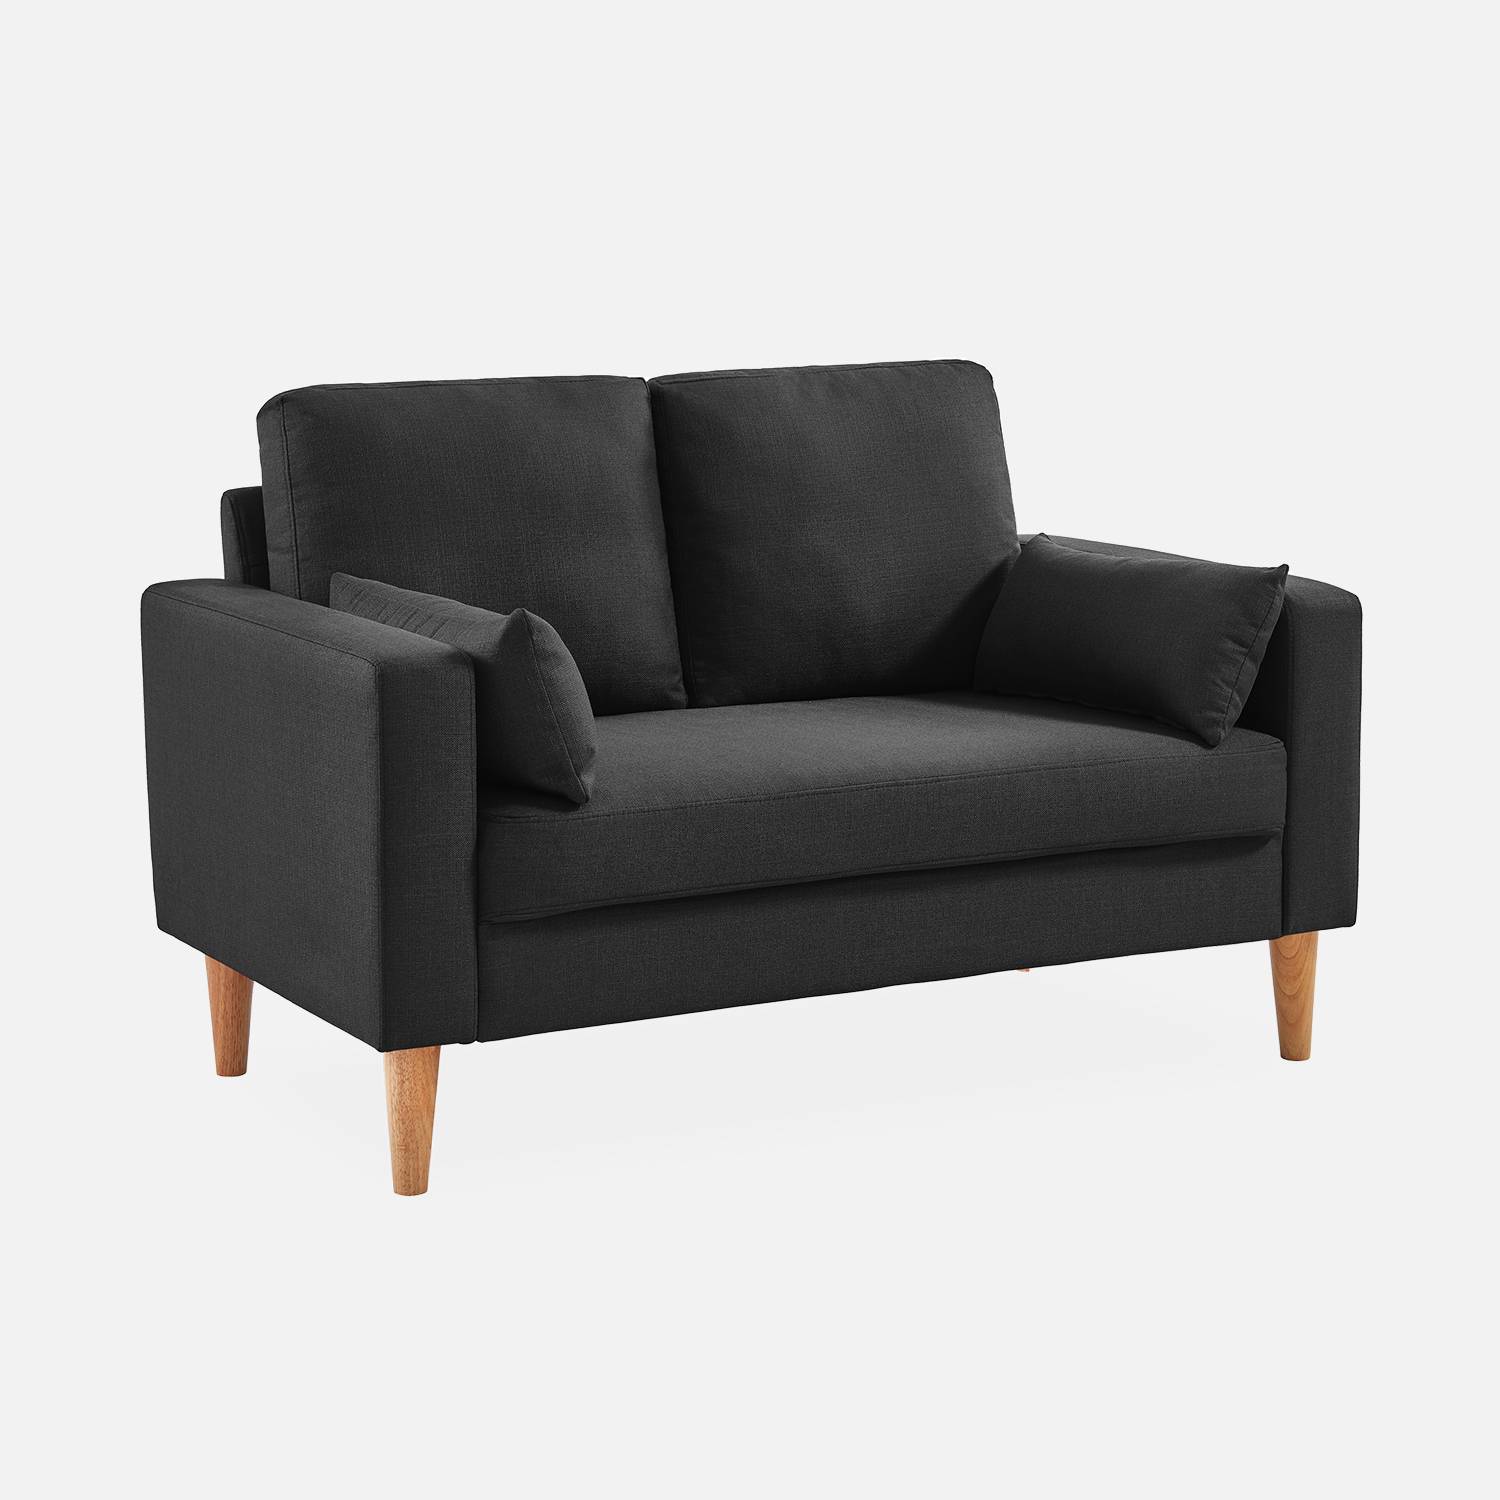 2-Sitz Sofa - Bjorn 2 - Dunkelgrau meliert, Gestell aus Eukalyptus, Bezug aus Polyester, Holzbeine, Sofa im skandinavischen Stil  | sweeek